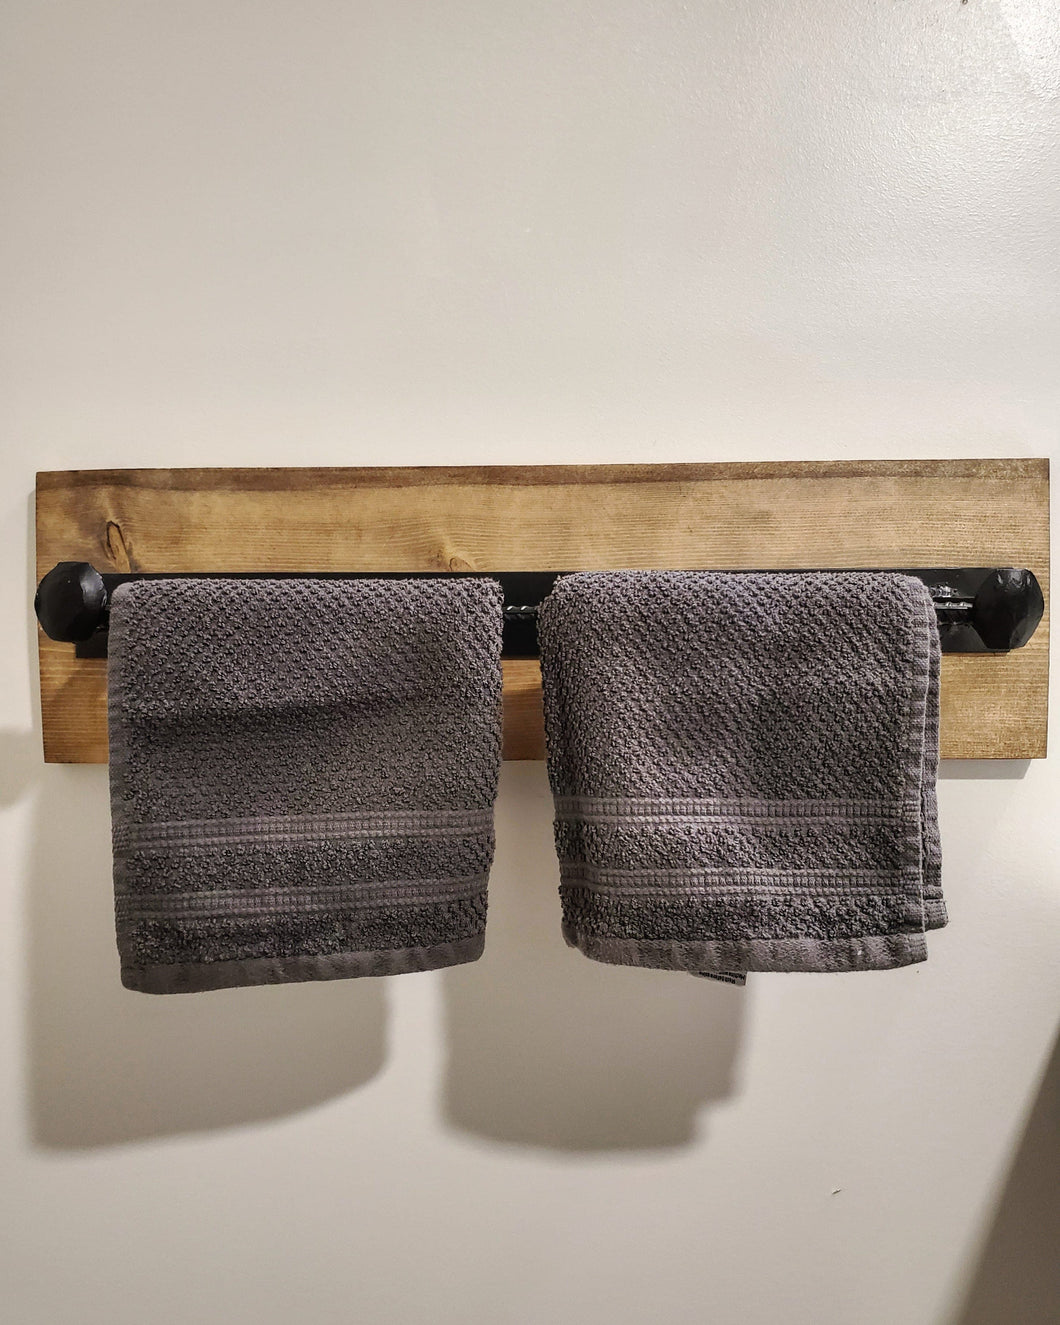 Rustic Towel Bar